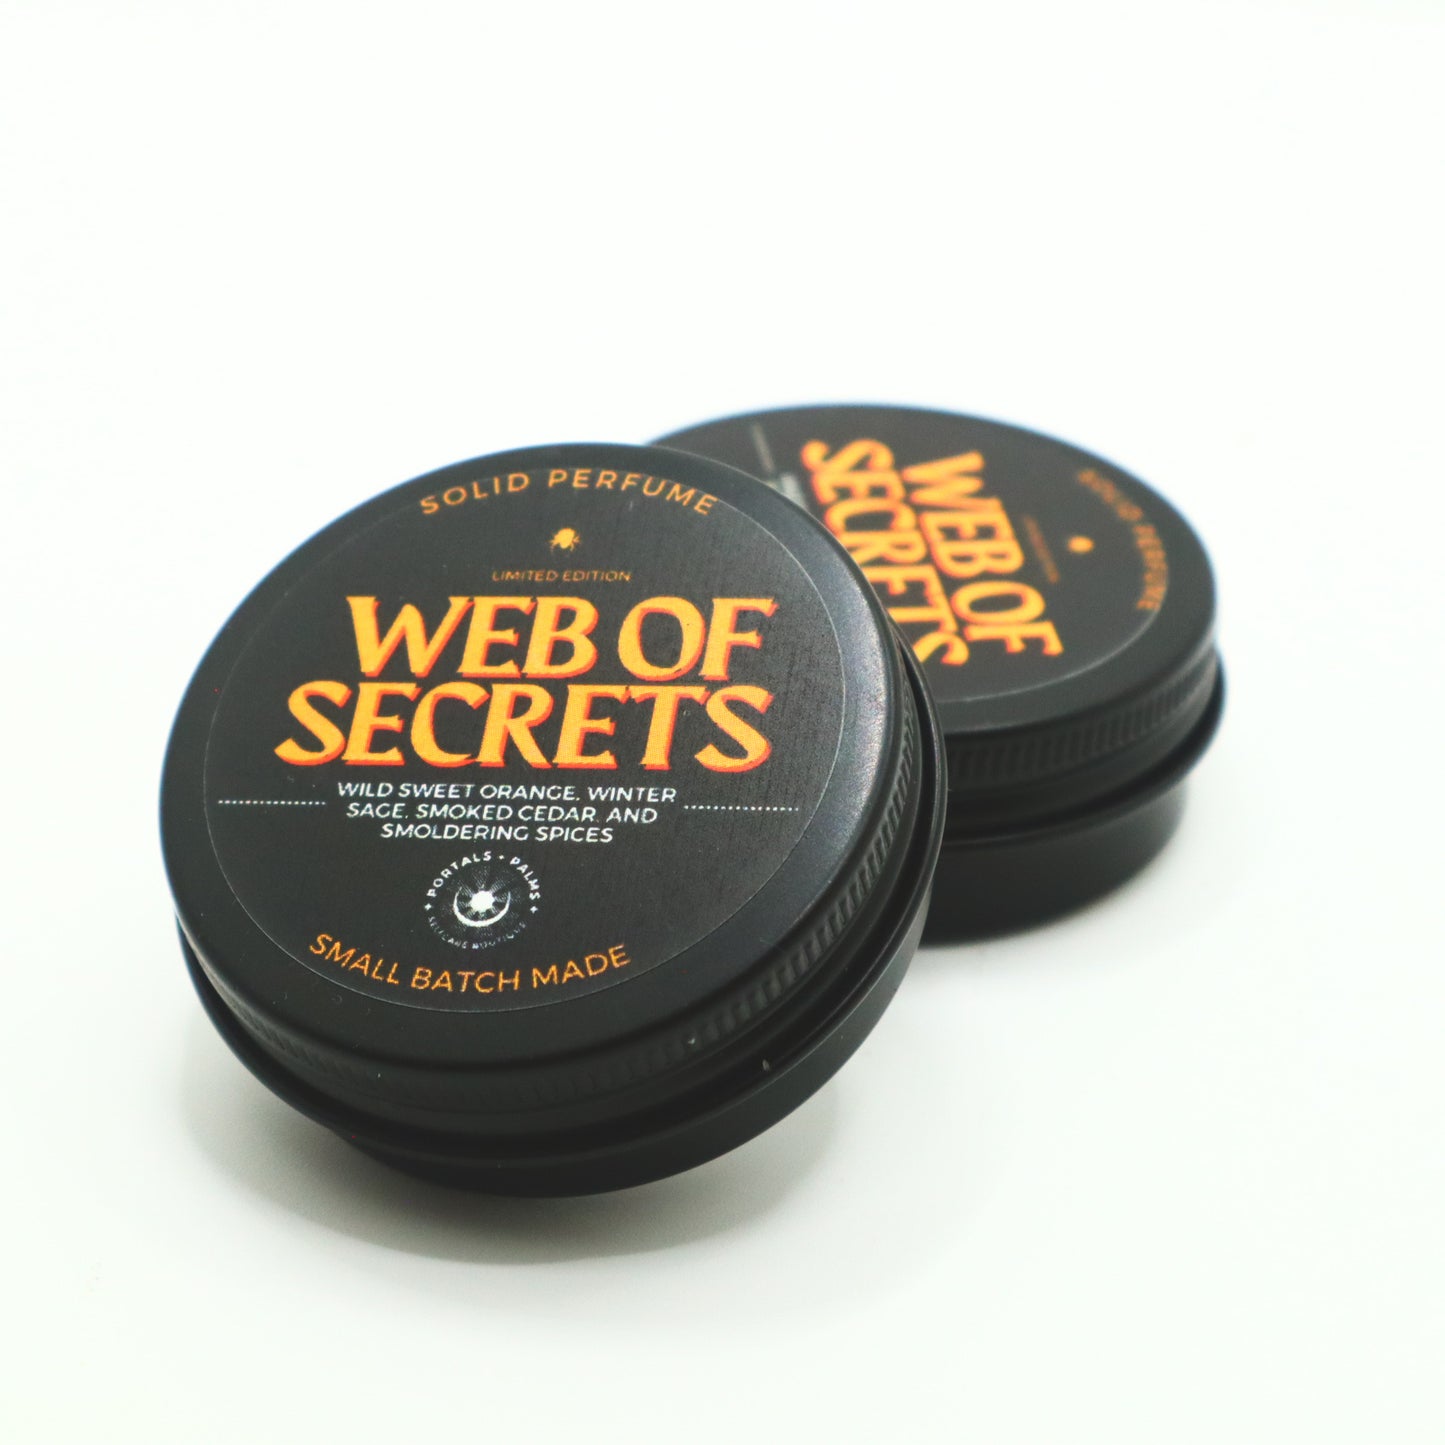 Solid Perfume “Web Of Secrets”